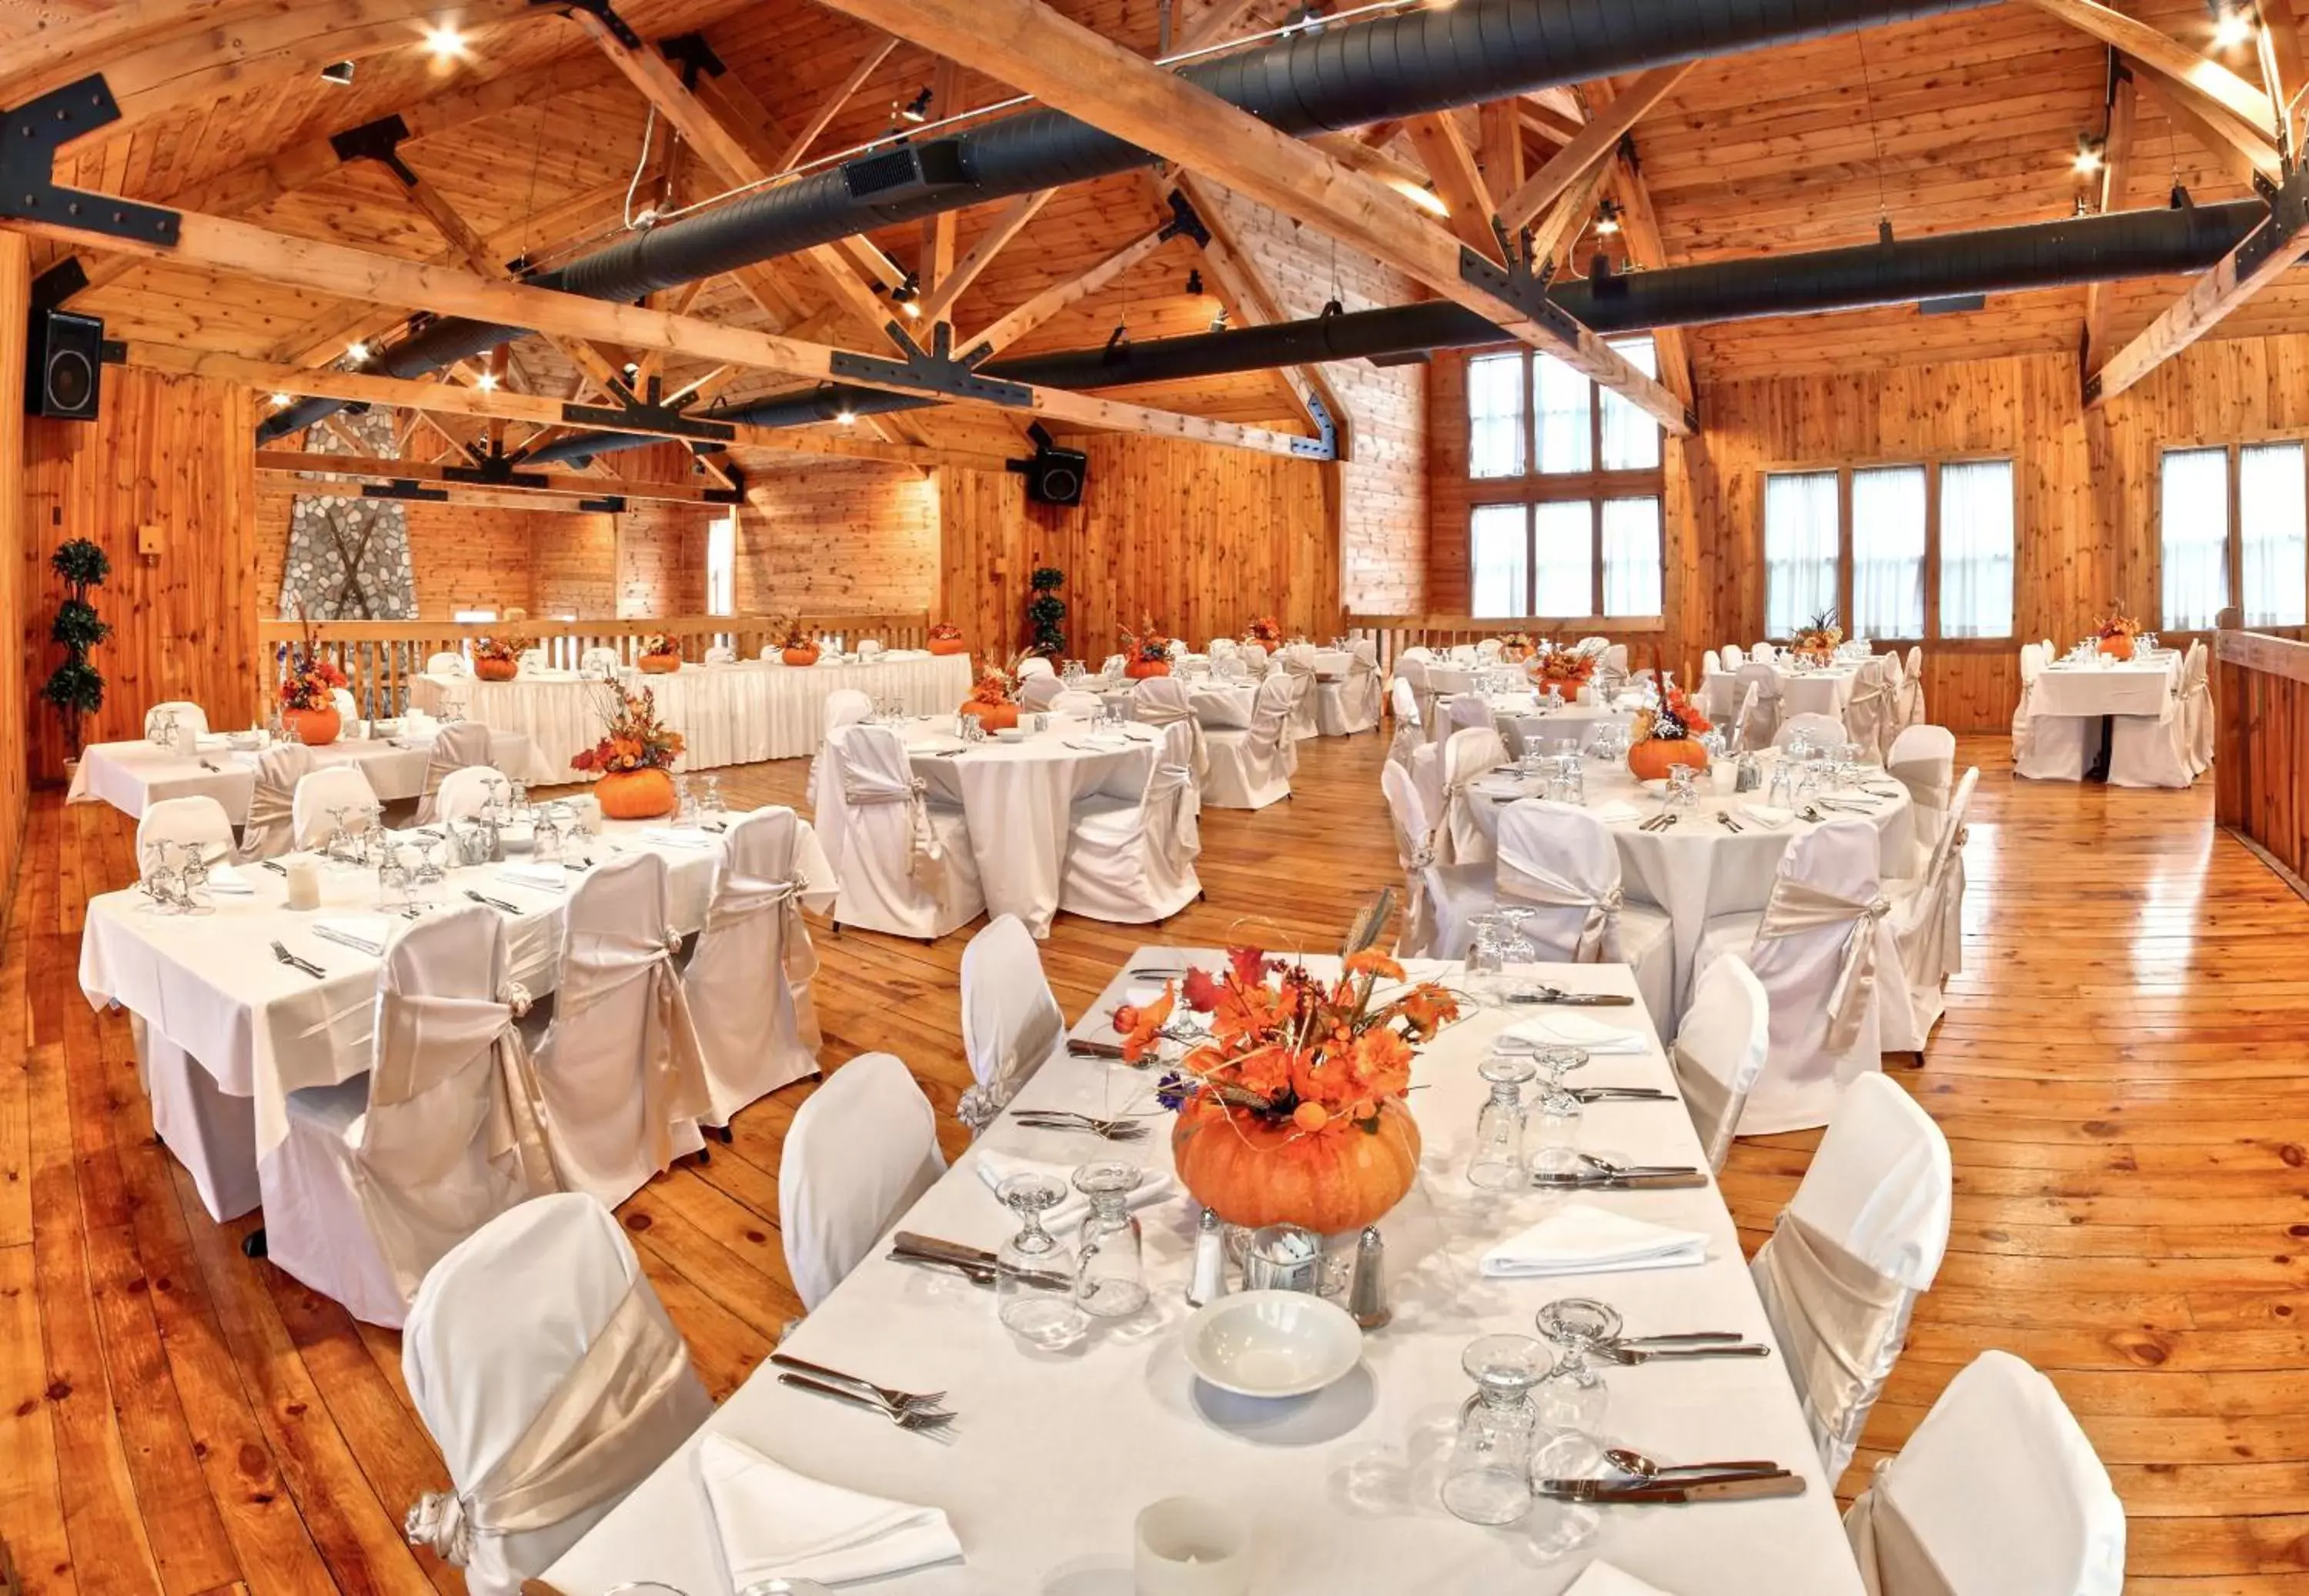 Banquet/Function facilities, Banquet Facilities in Caberfae Peaks Ski & Golf Resort